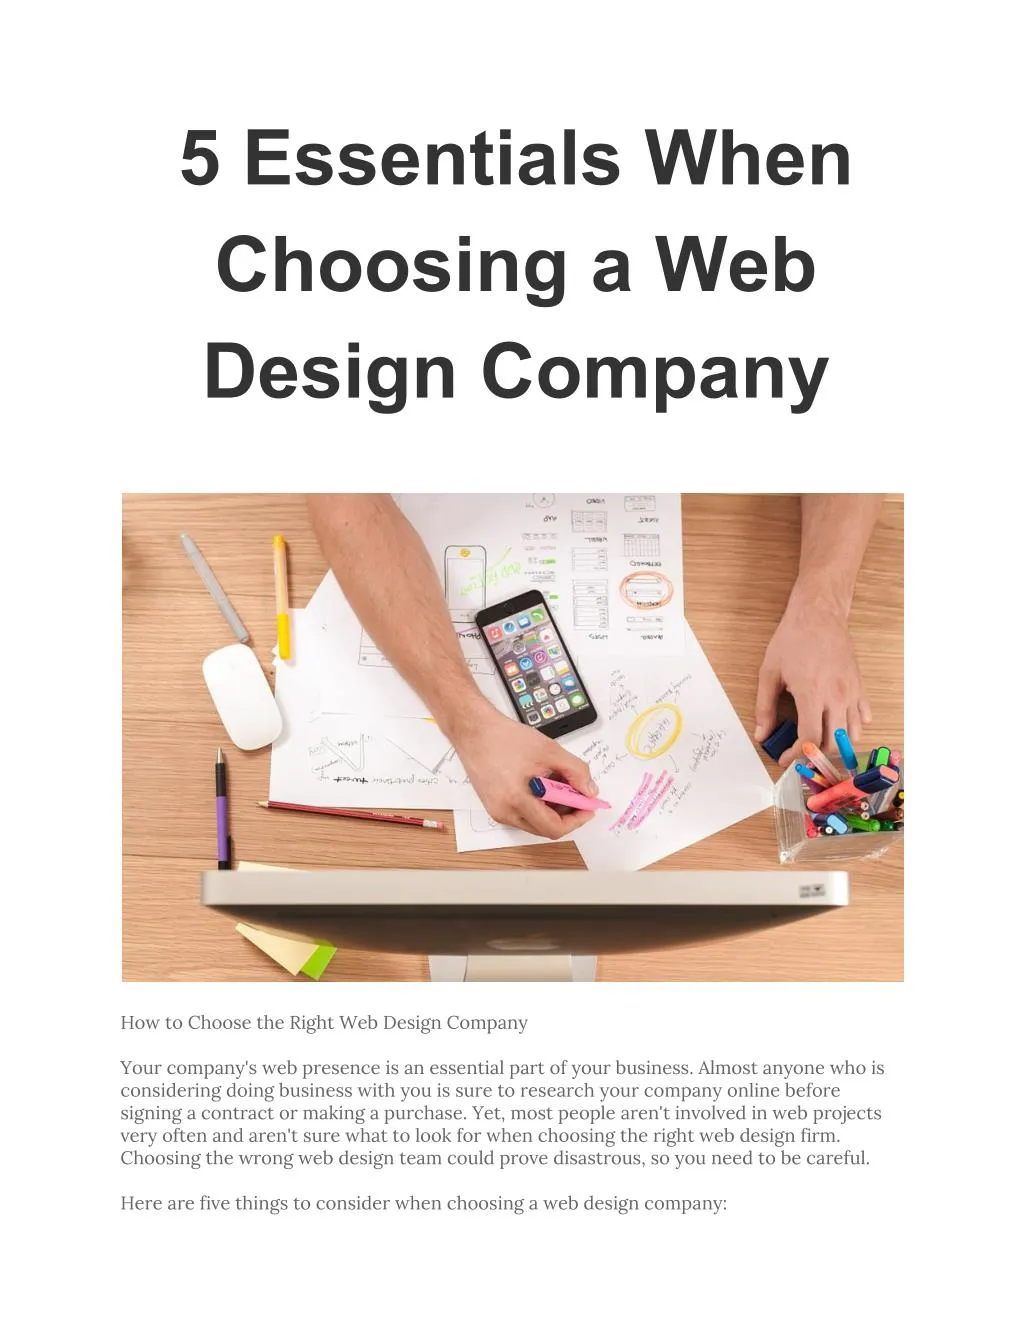 5 essentials when choosing a web design company